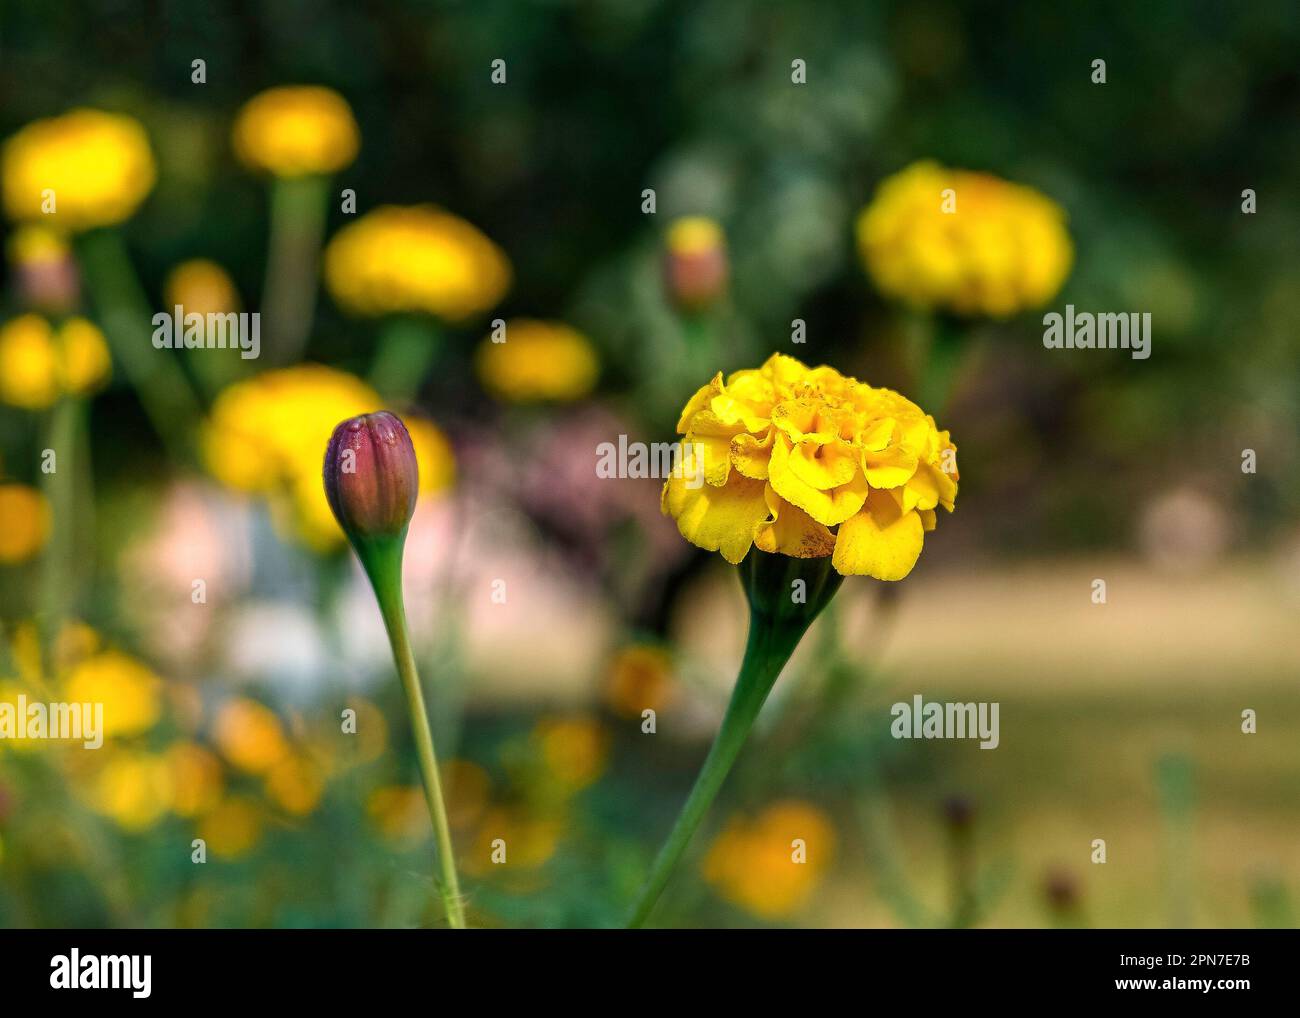 Garden in Lalpur Village, Rupnagar, Punjab, India. Yellow Zinnia flowers Stock Photo